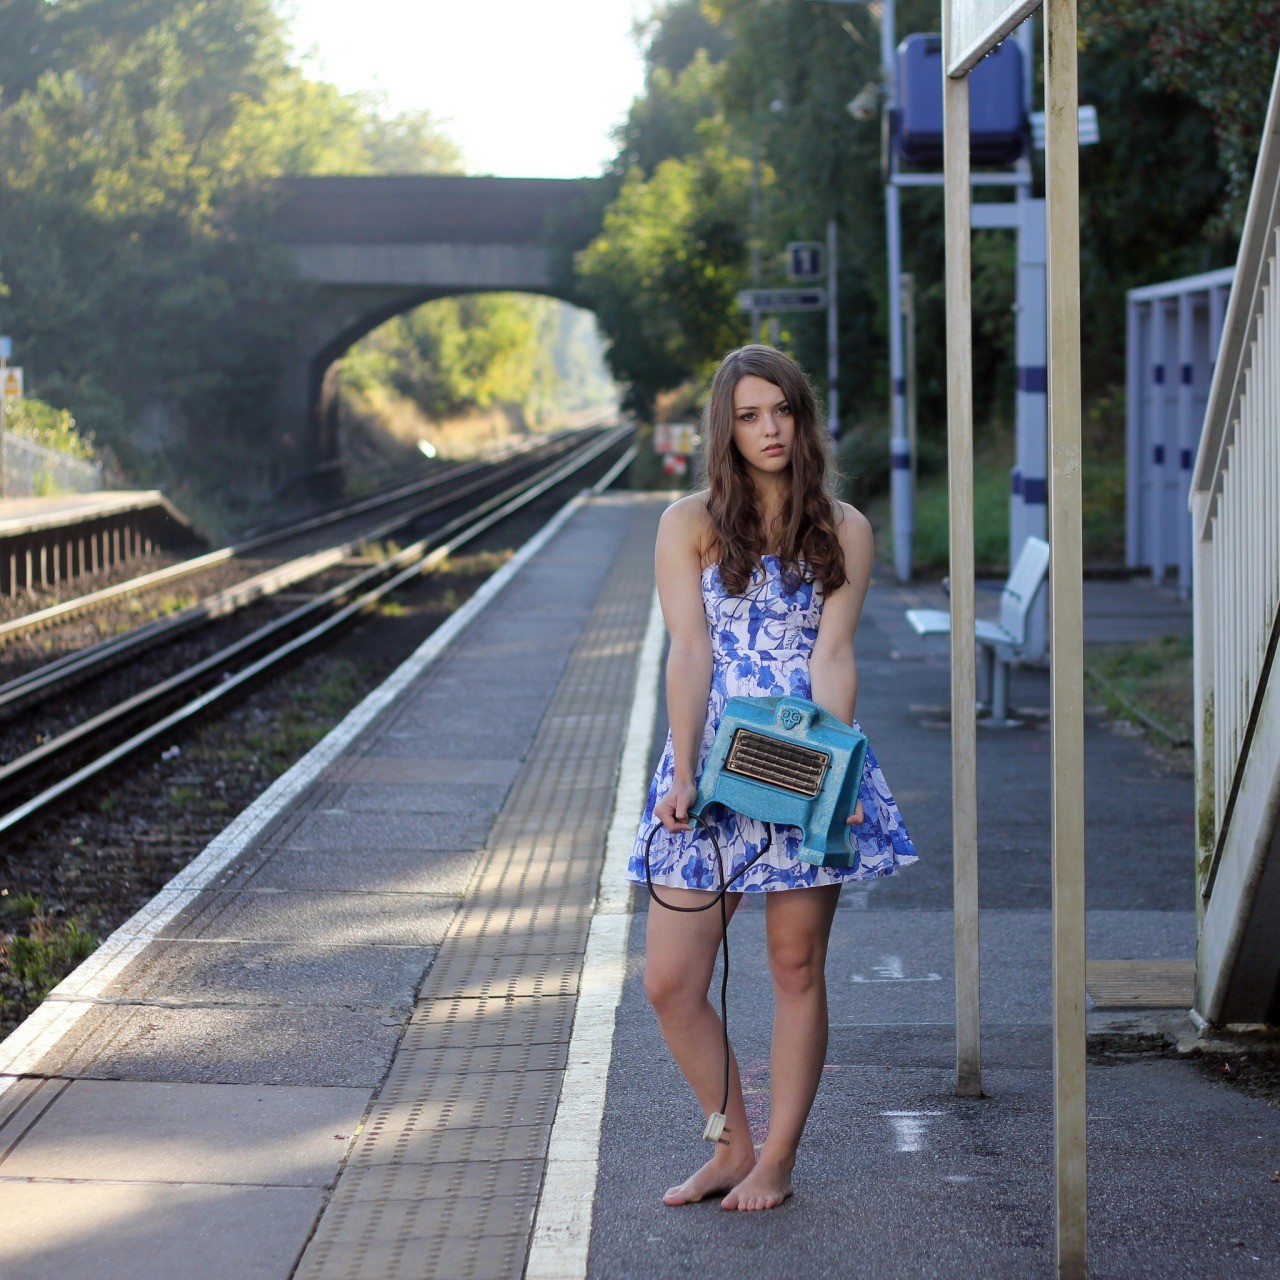 Barefoot Women Women Outdoors Bare Shoulders Long Hair British Summer Dress Standing Railway Station 1280x1280